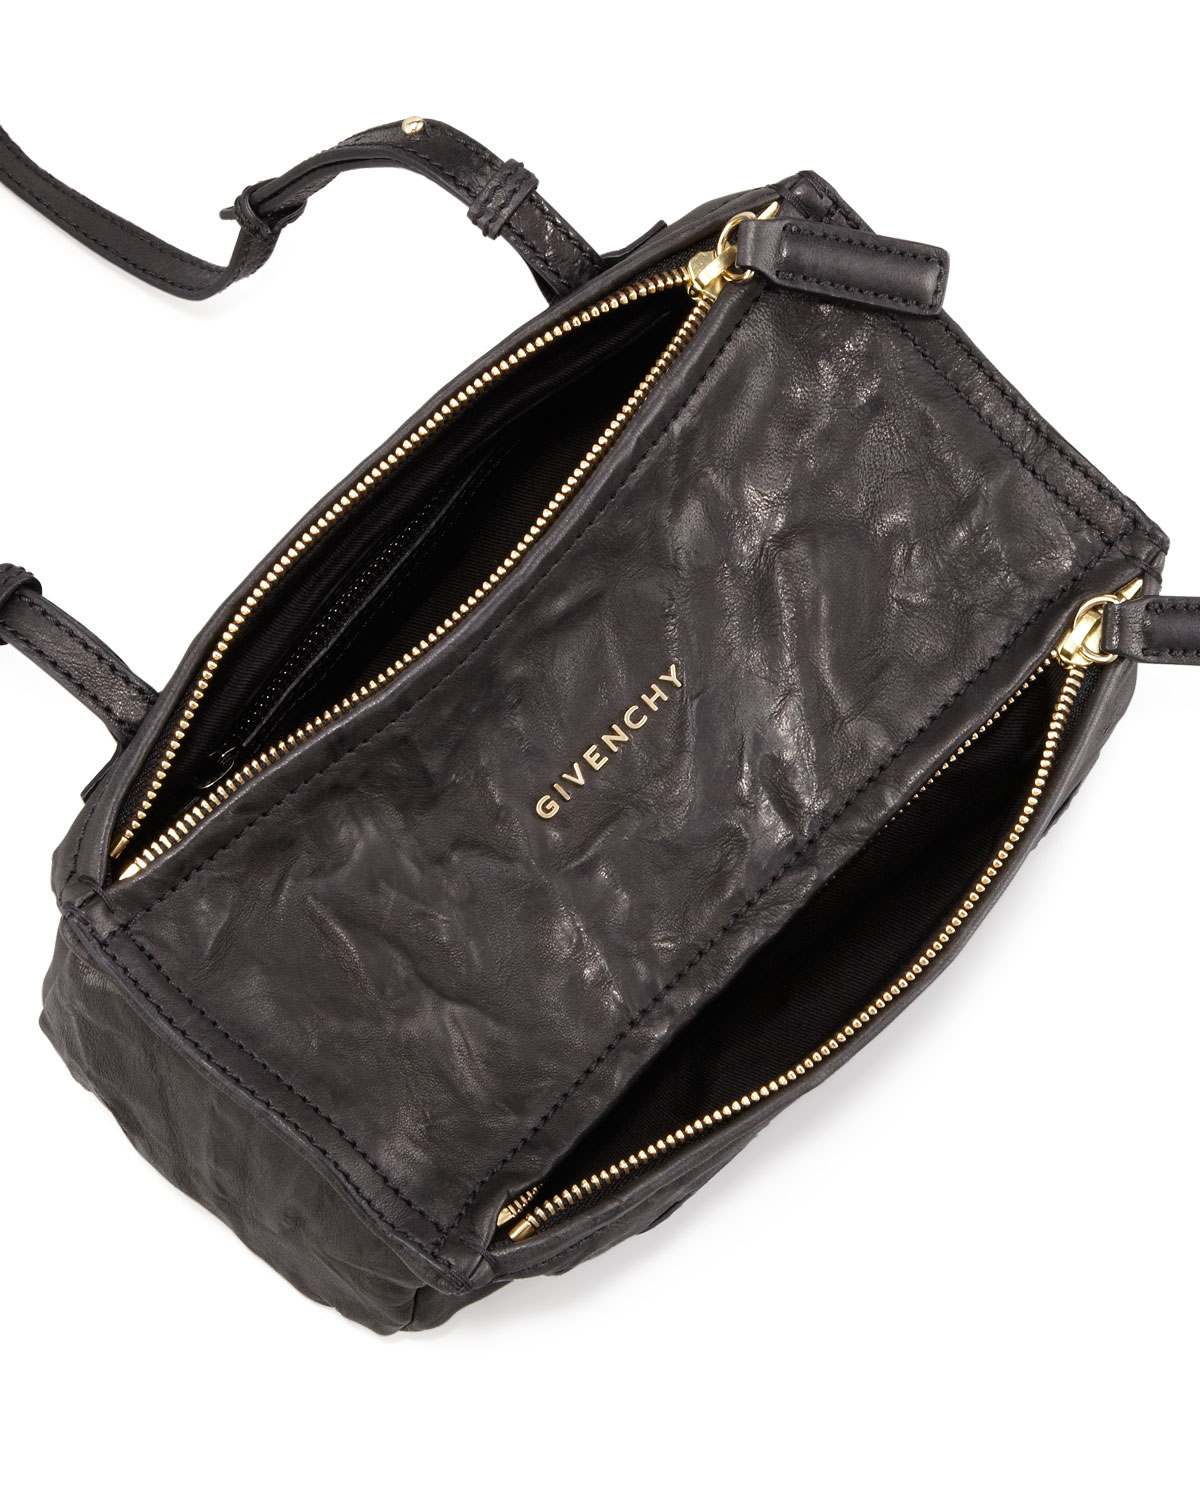 Givenchy Pandora Mini Leather Crossbody Bag in Black | Lyst